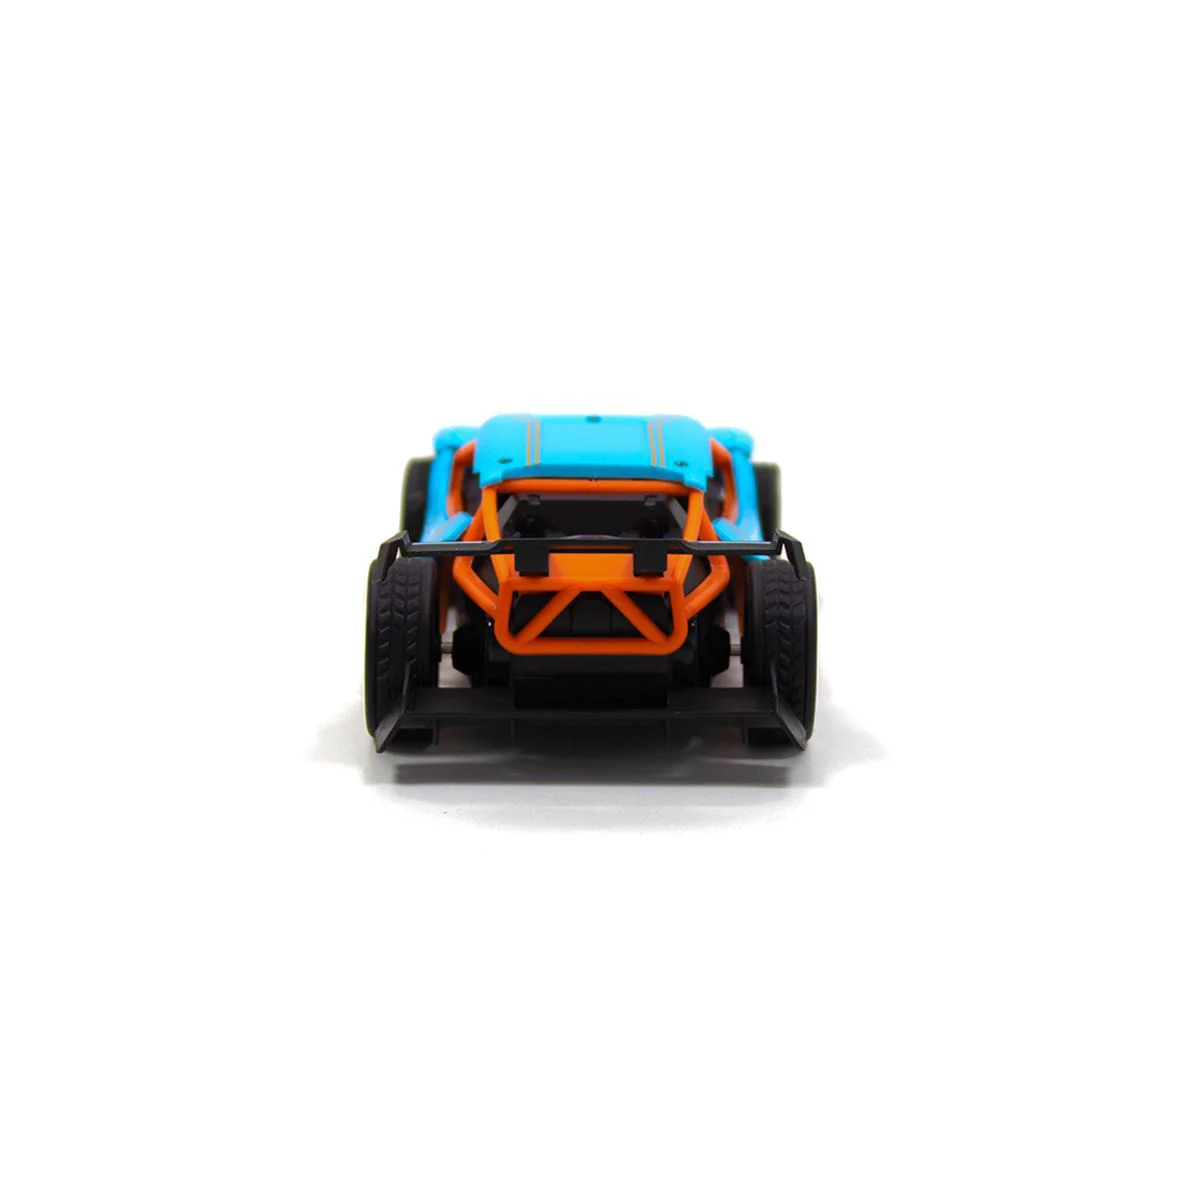 Masina cu telecomanda Sulong Toys Speed Racing Drift Red Sing, 1:24